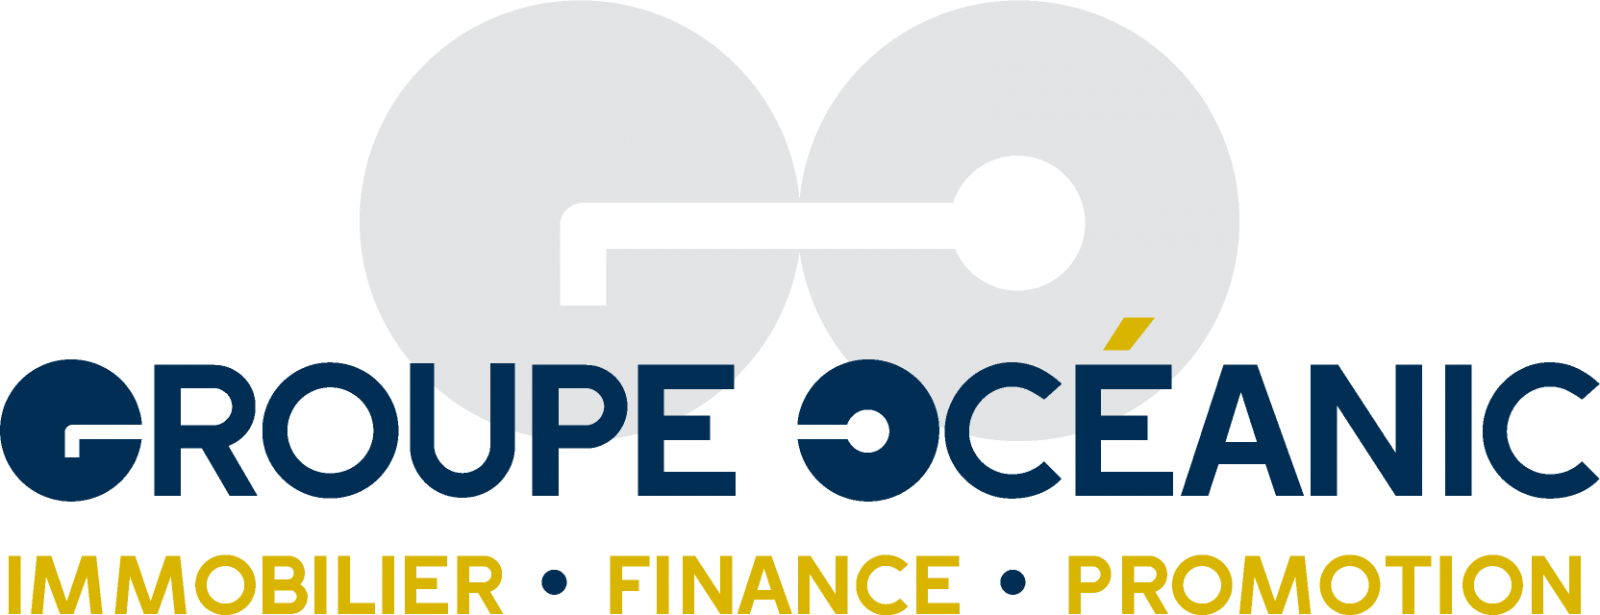 logo-oceanic-xl.png